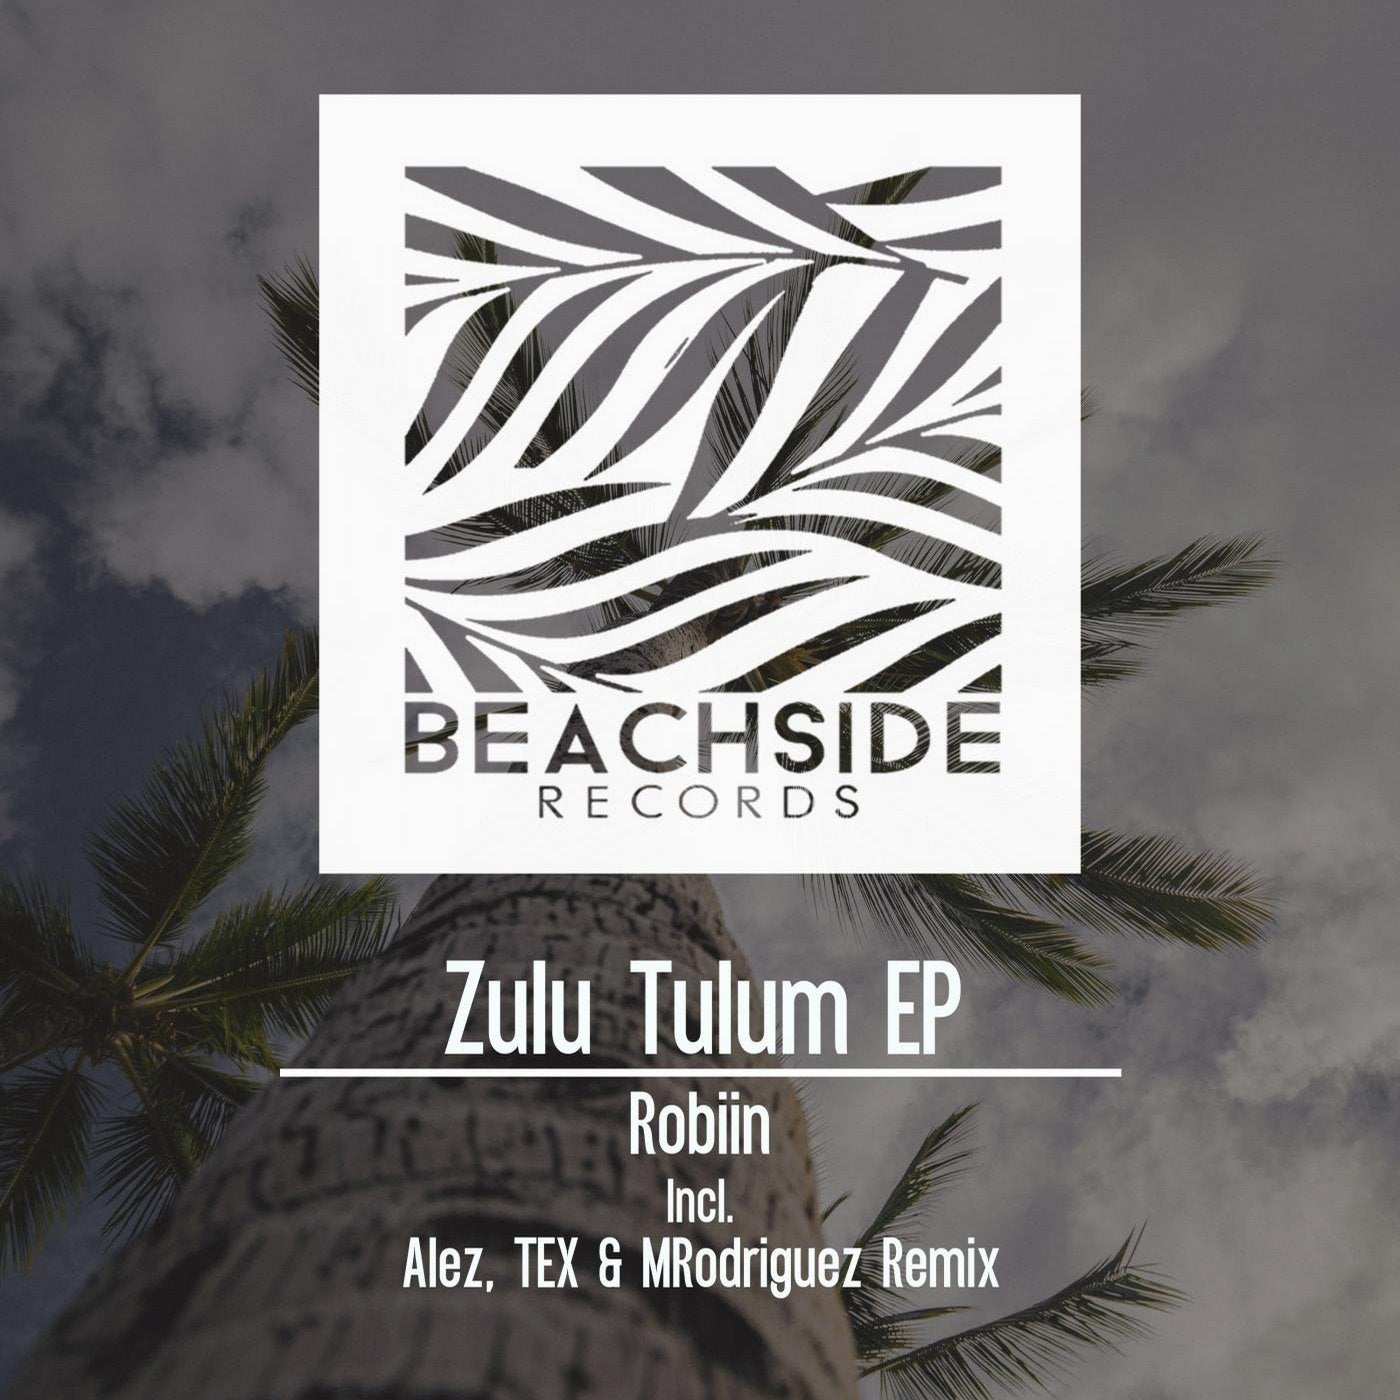 Zulu Tulum EP